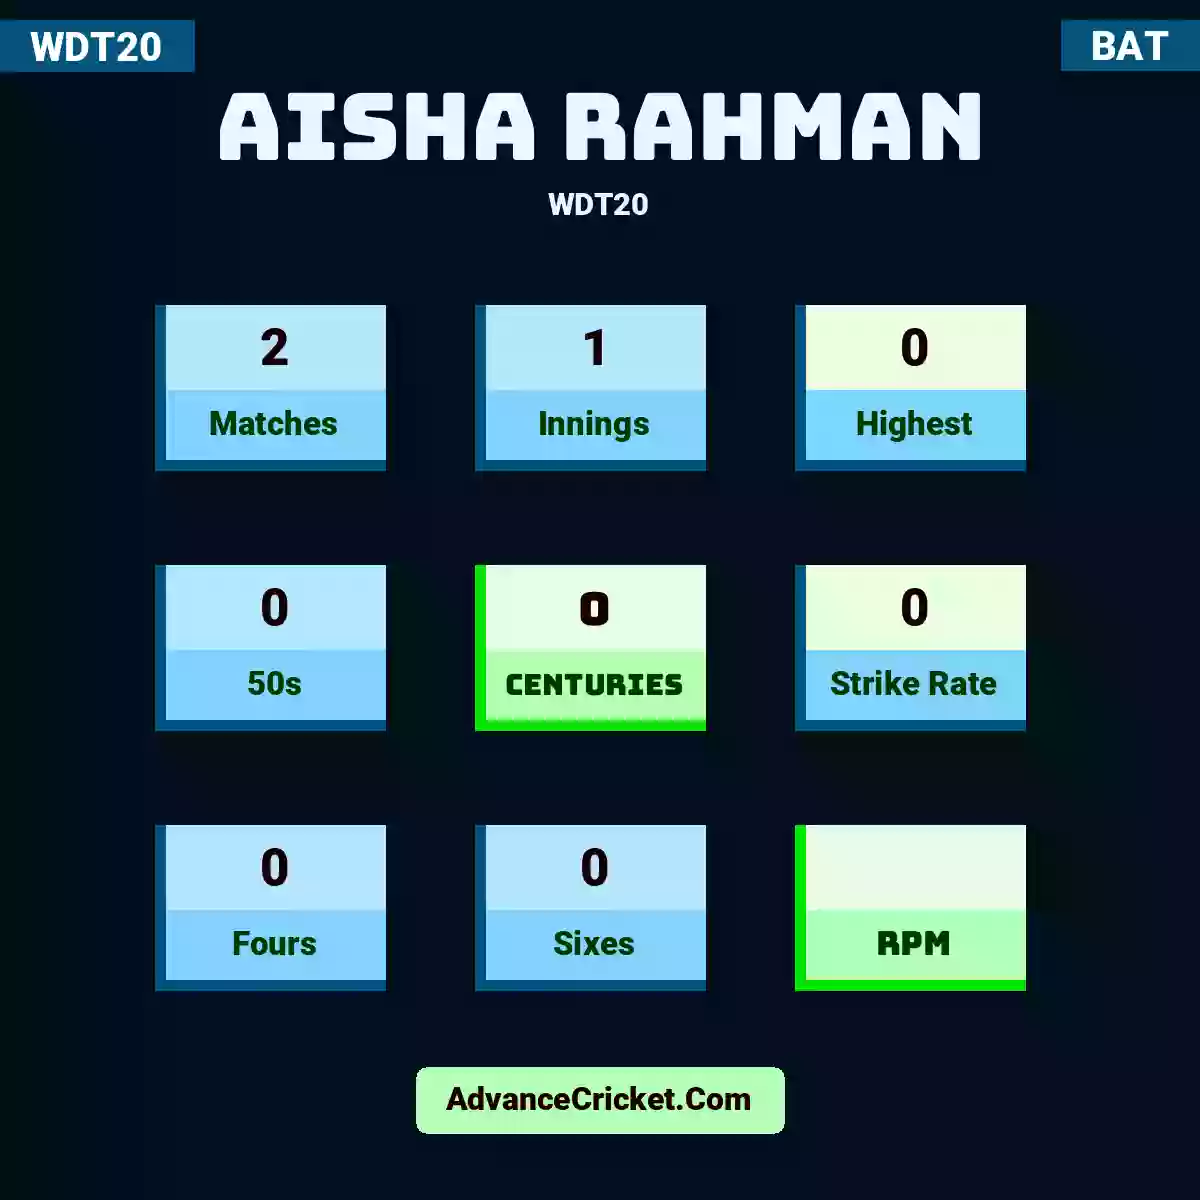 Aisha Rahman WDT20 , Aisha Rahman played 2 matches, scored 0 runs as highest, 0 half-centuries, and 0 centuries, with a strike rate of 0. A.Rahman hit 0 fours and 0 sixes.